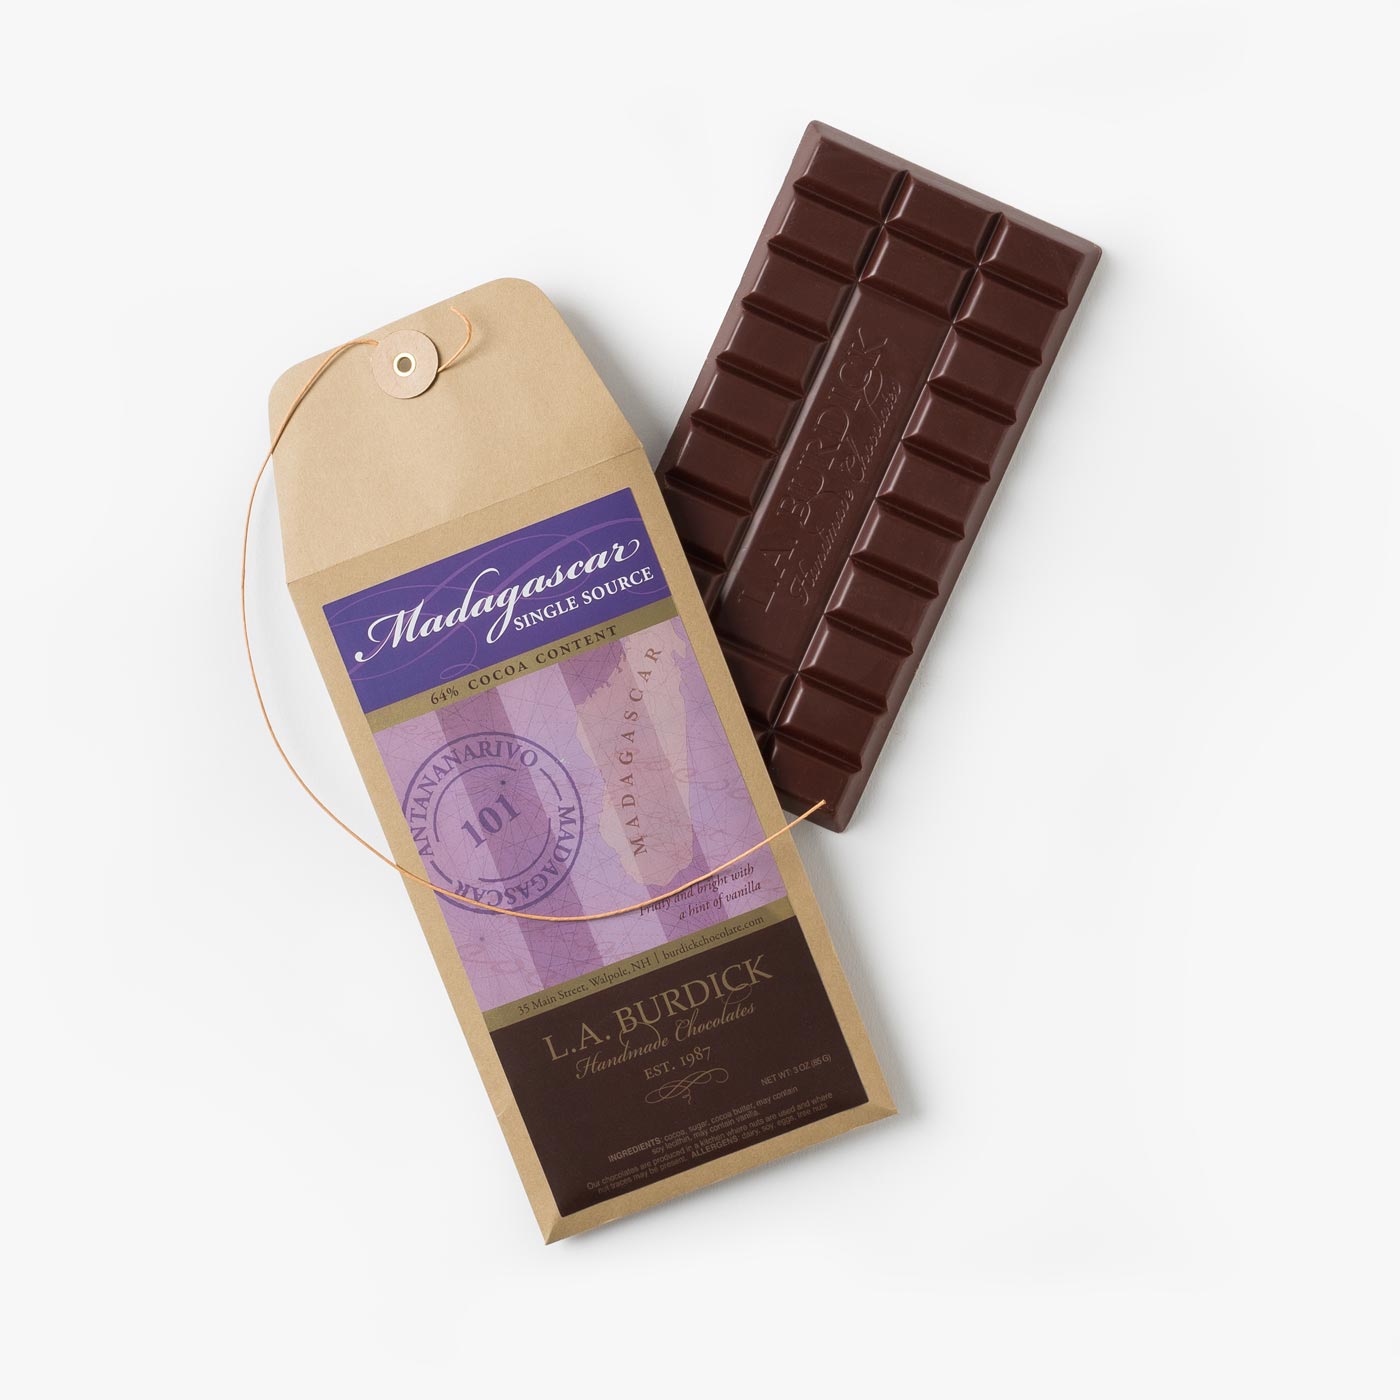 Dark Chocolate Bar  L.A. Burdick Chocolates